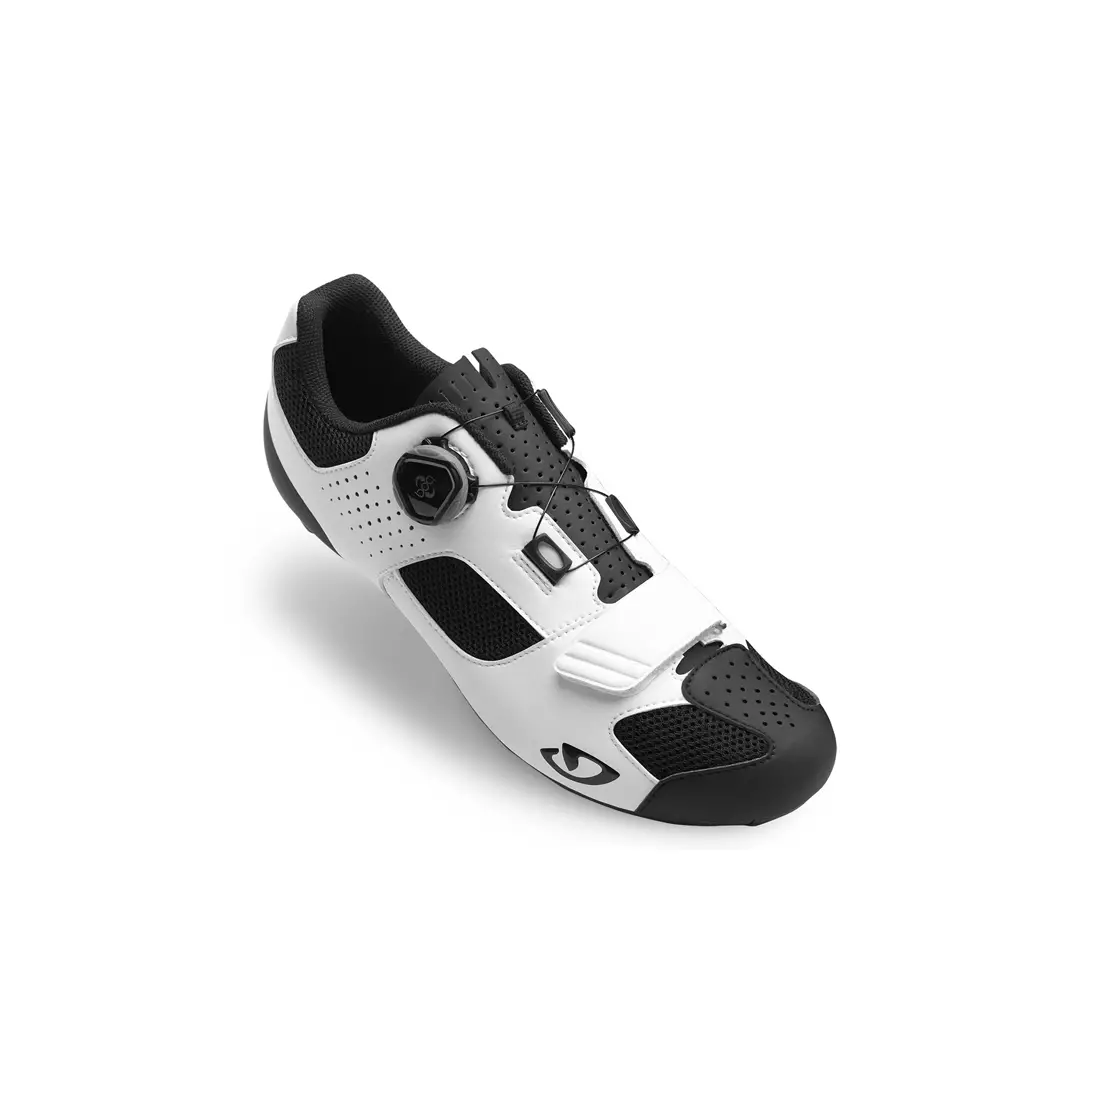 Men's bicycle boots GIRO TRANS BOA white black 